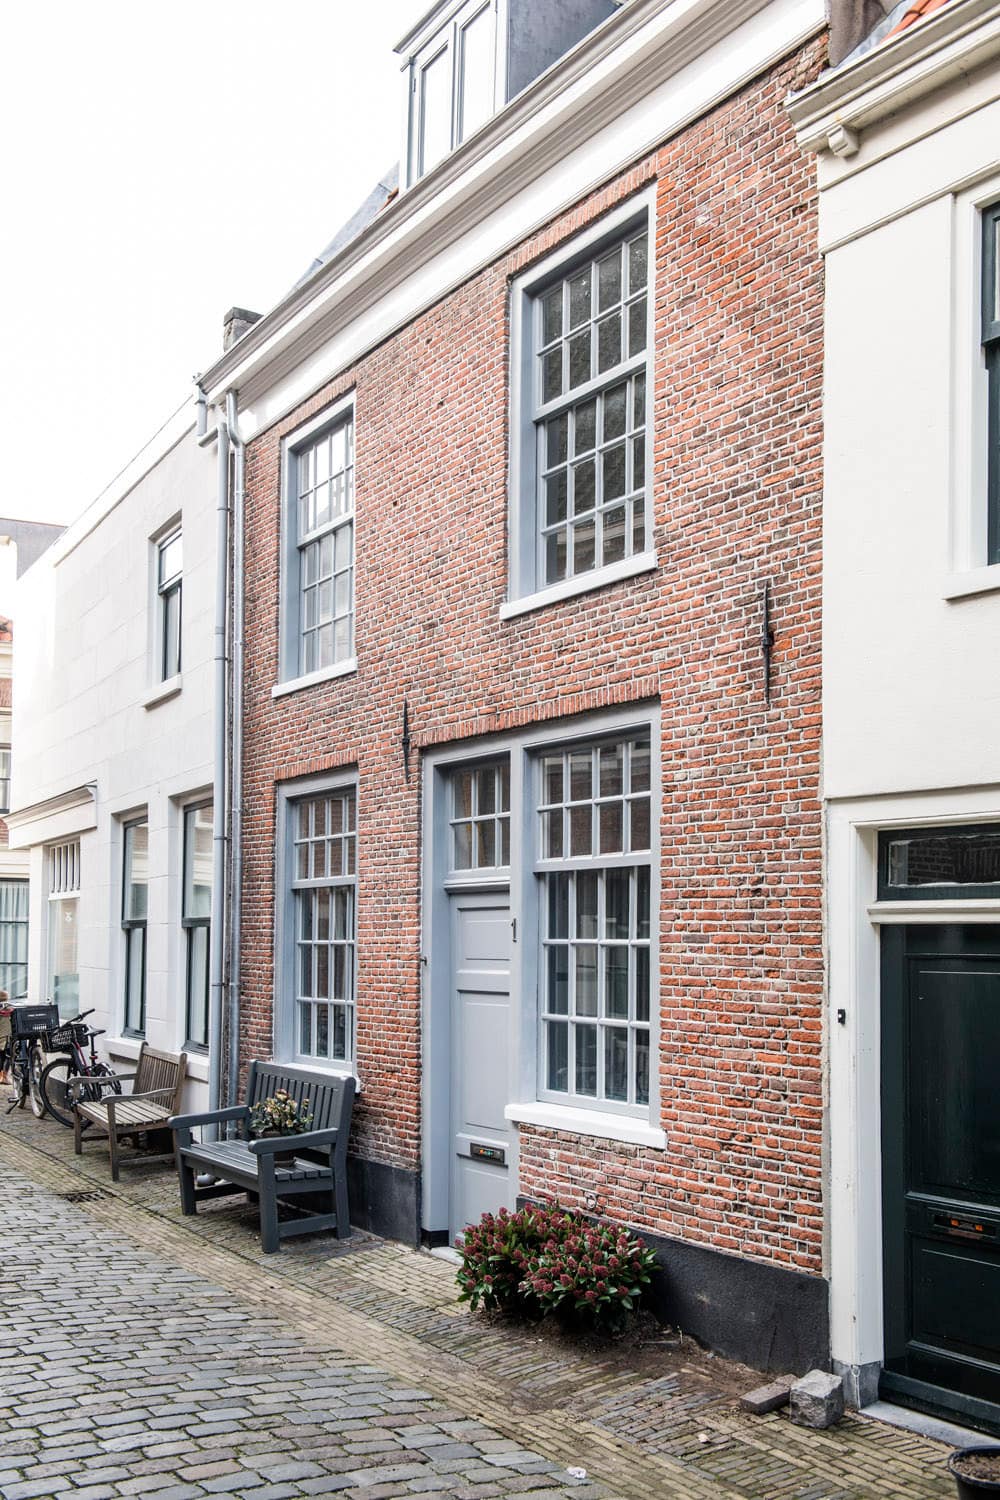 Historis City House, The Netherlands